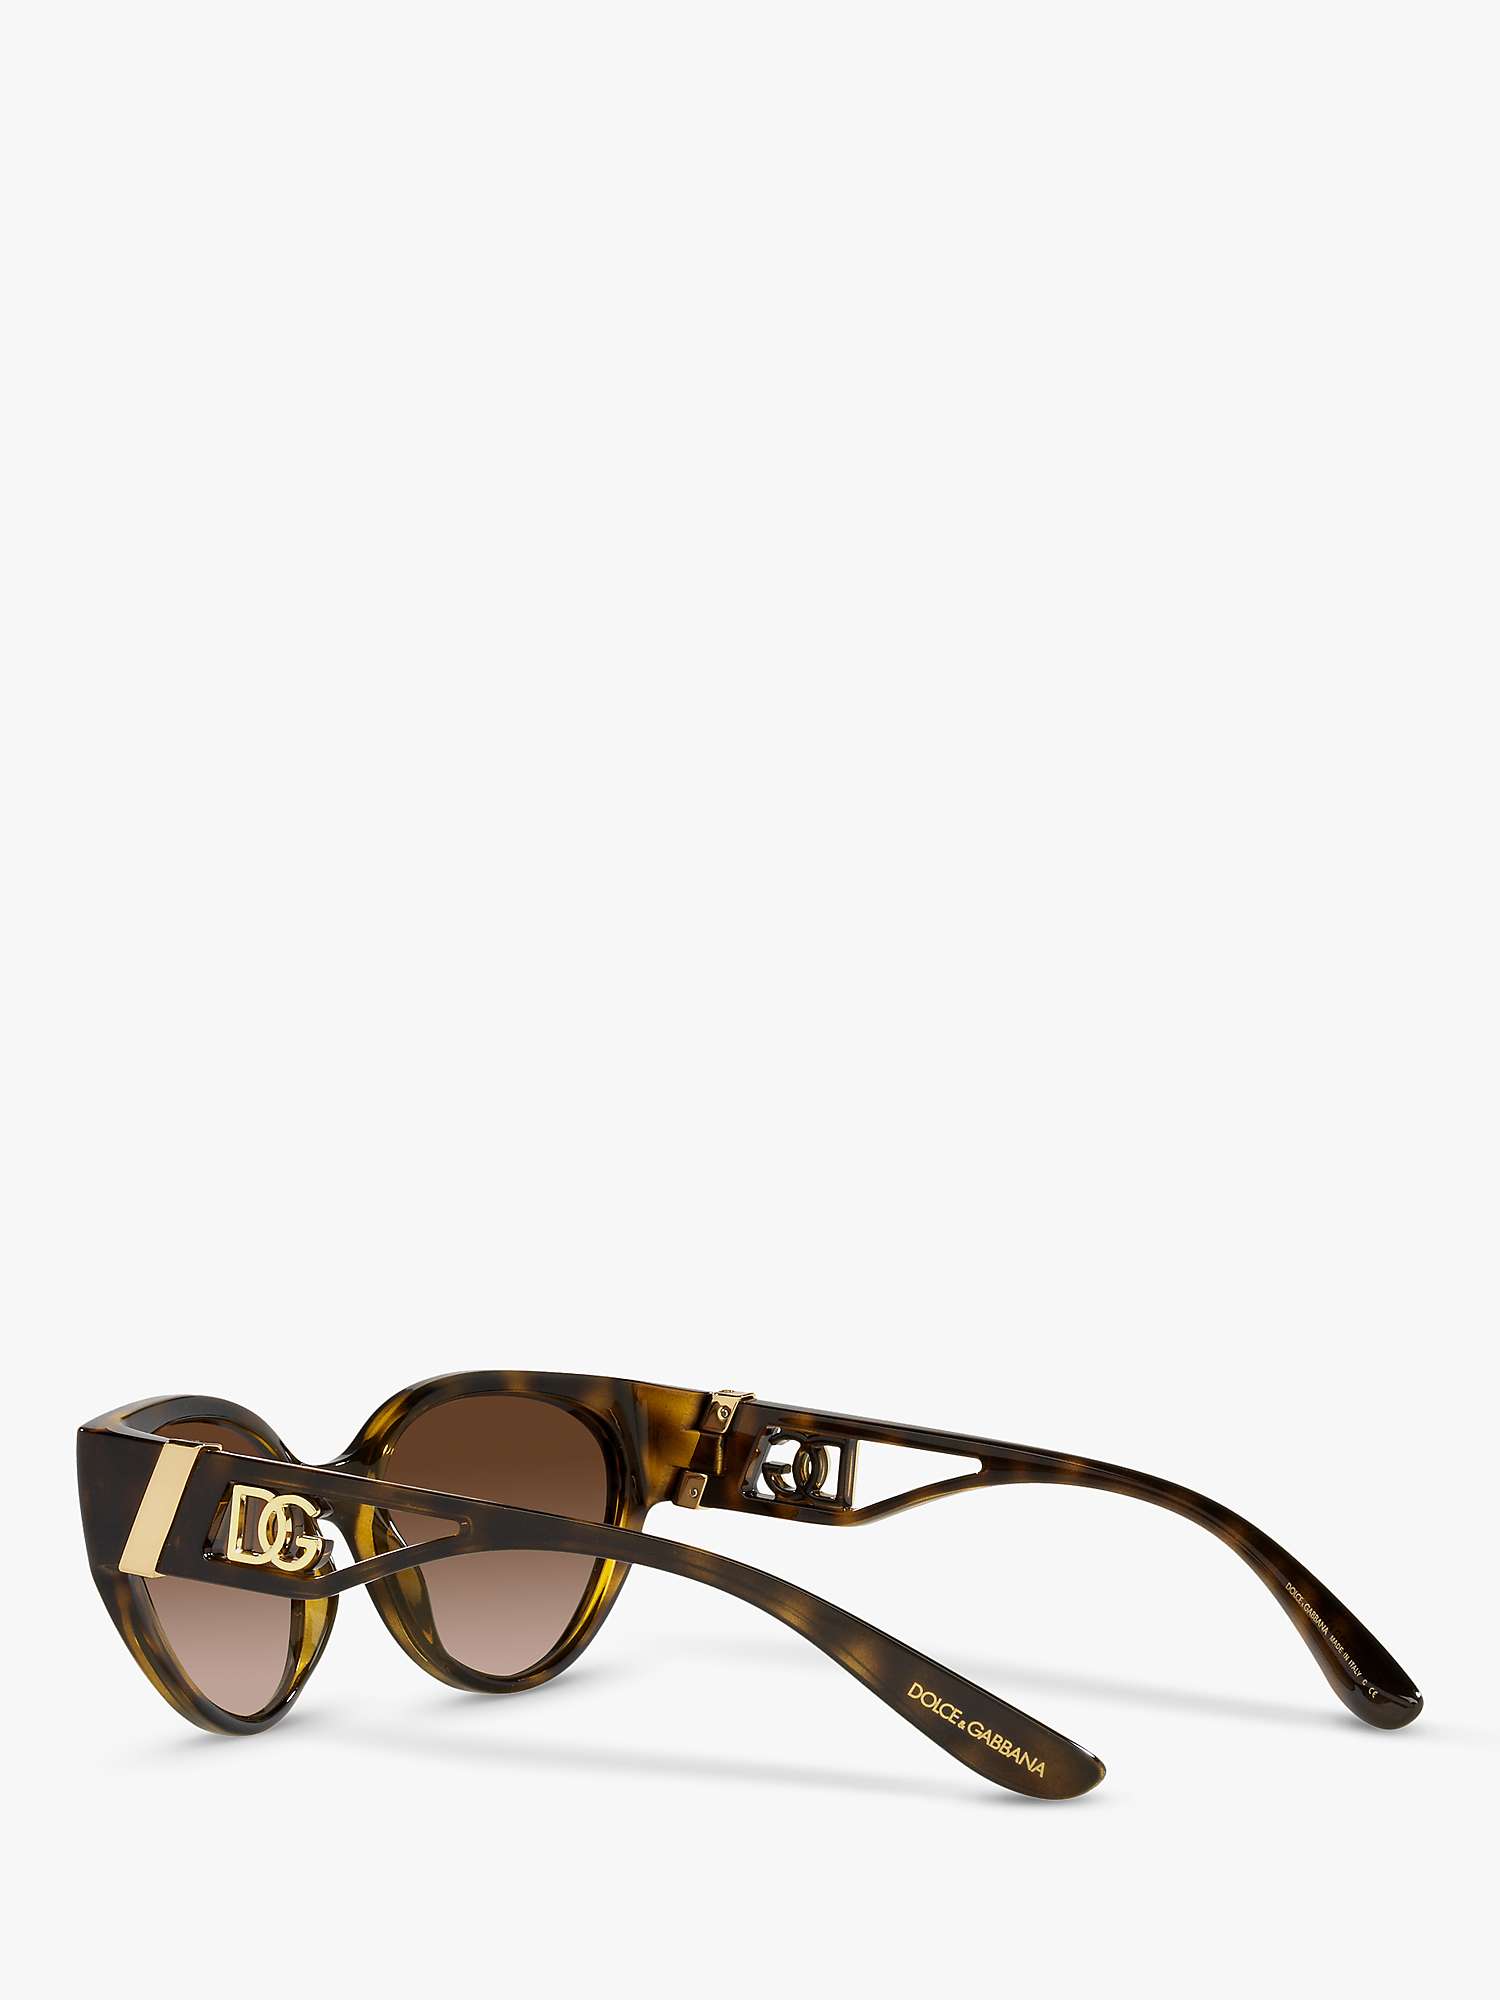 Dolce & Gabbana DG6146 Women's Cat's Eye Sunglasses, Havana/Brown ...